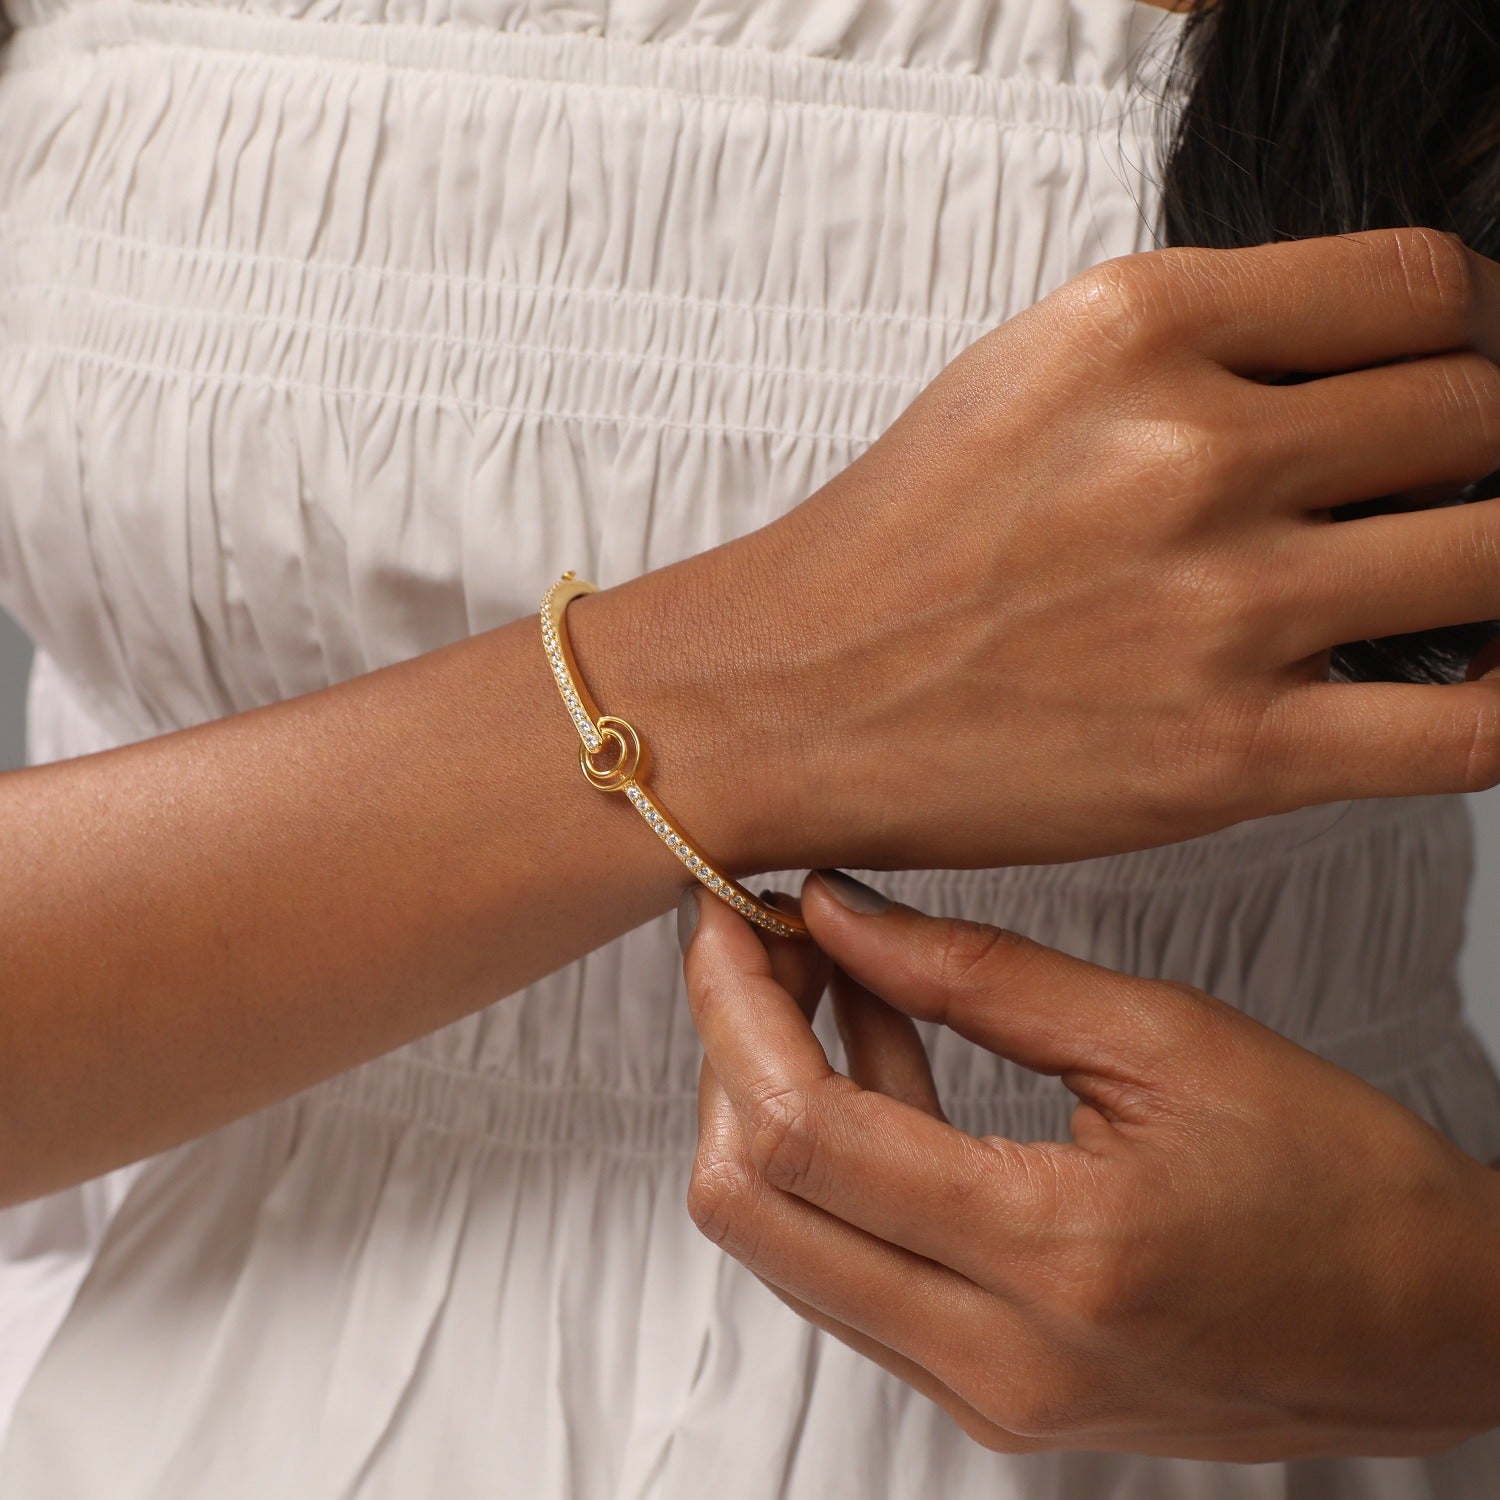 How To Spot A Fake Cartier Love Bracelet? [GUIDE+VIDEO]